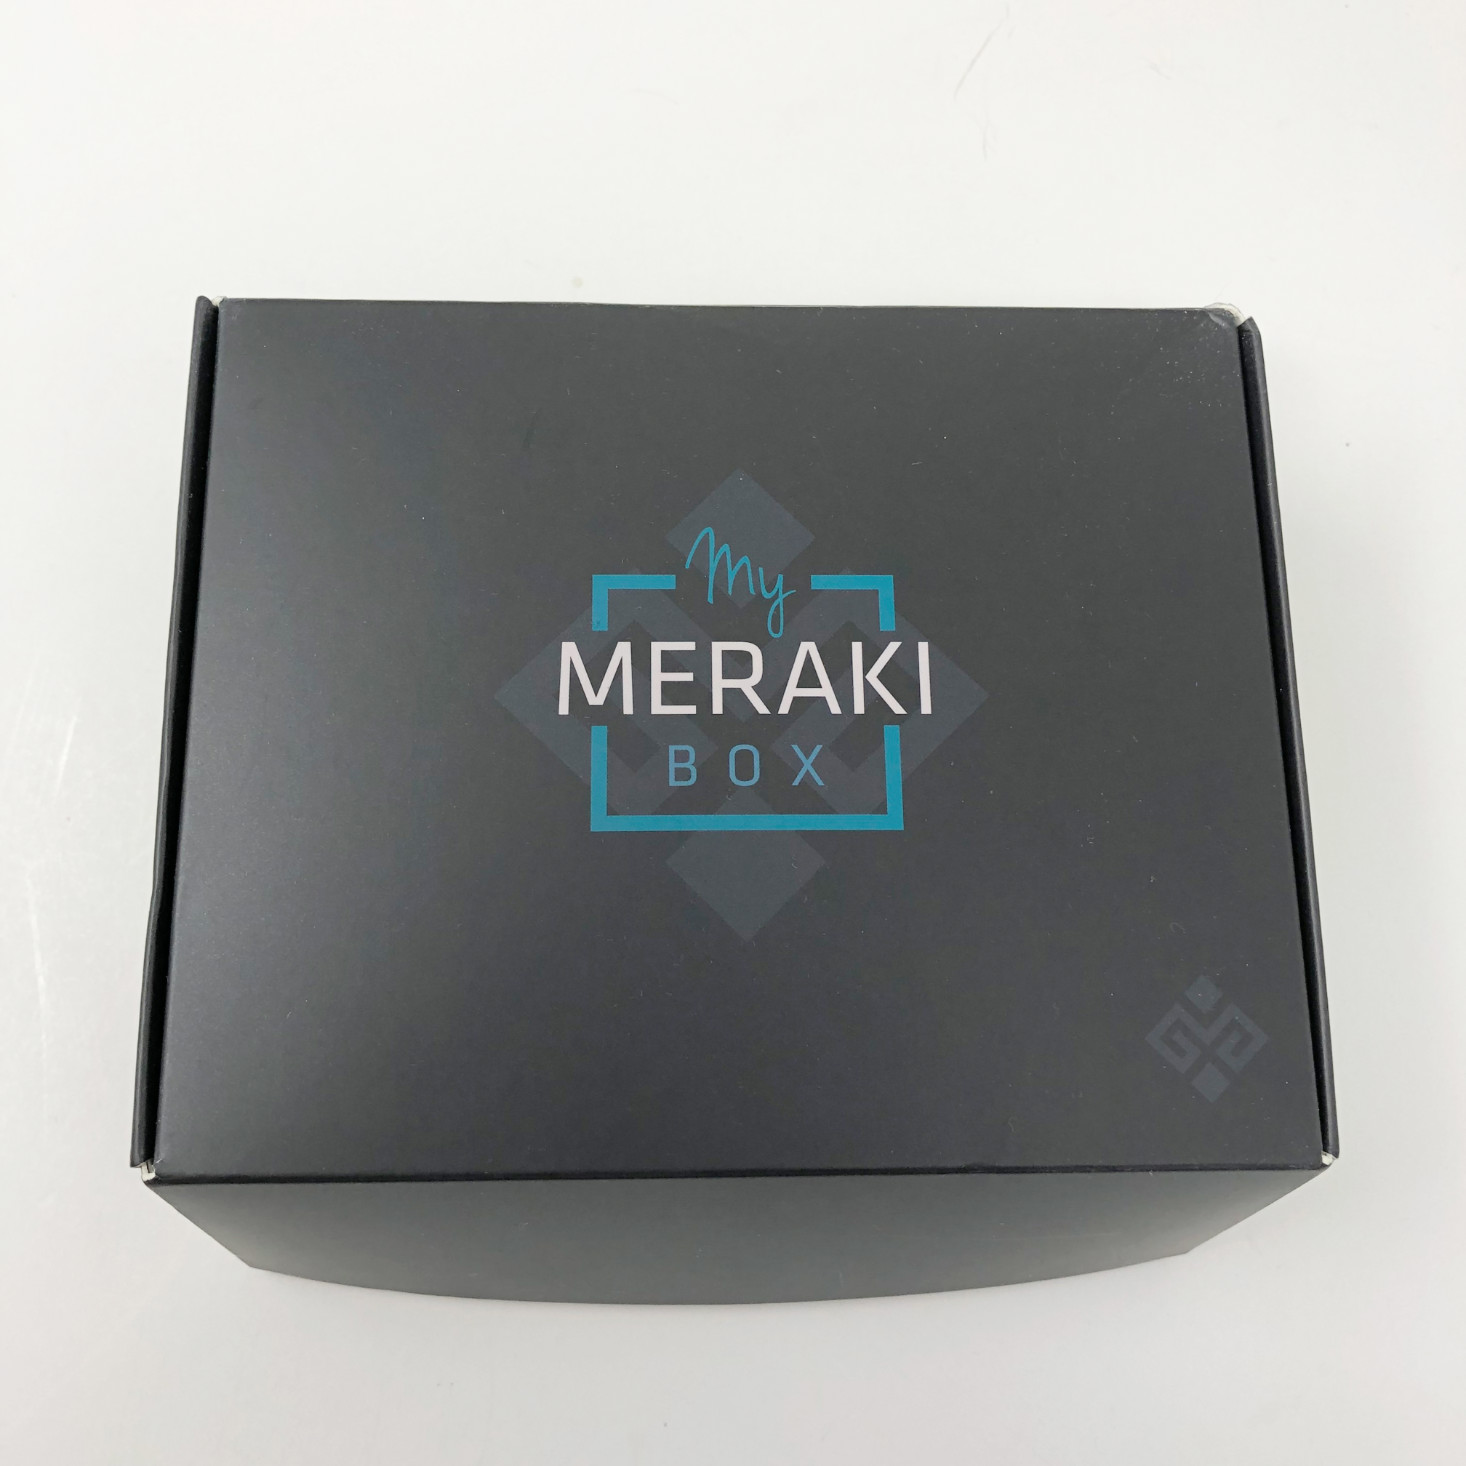 My Meraki Box Jewelry Subscription Review – June 2019